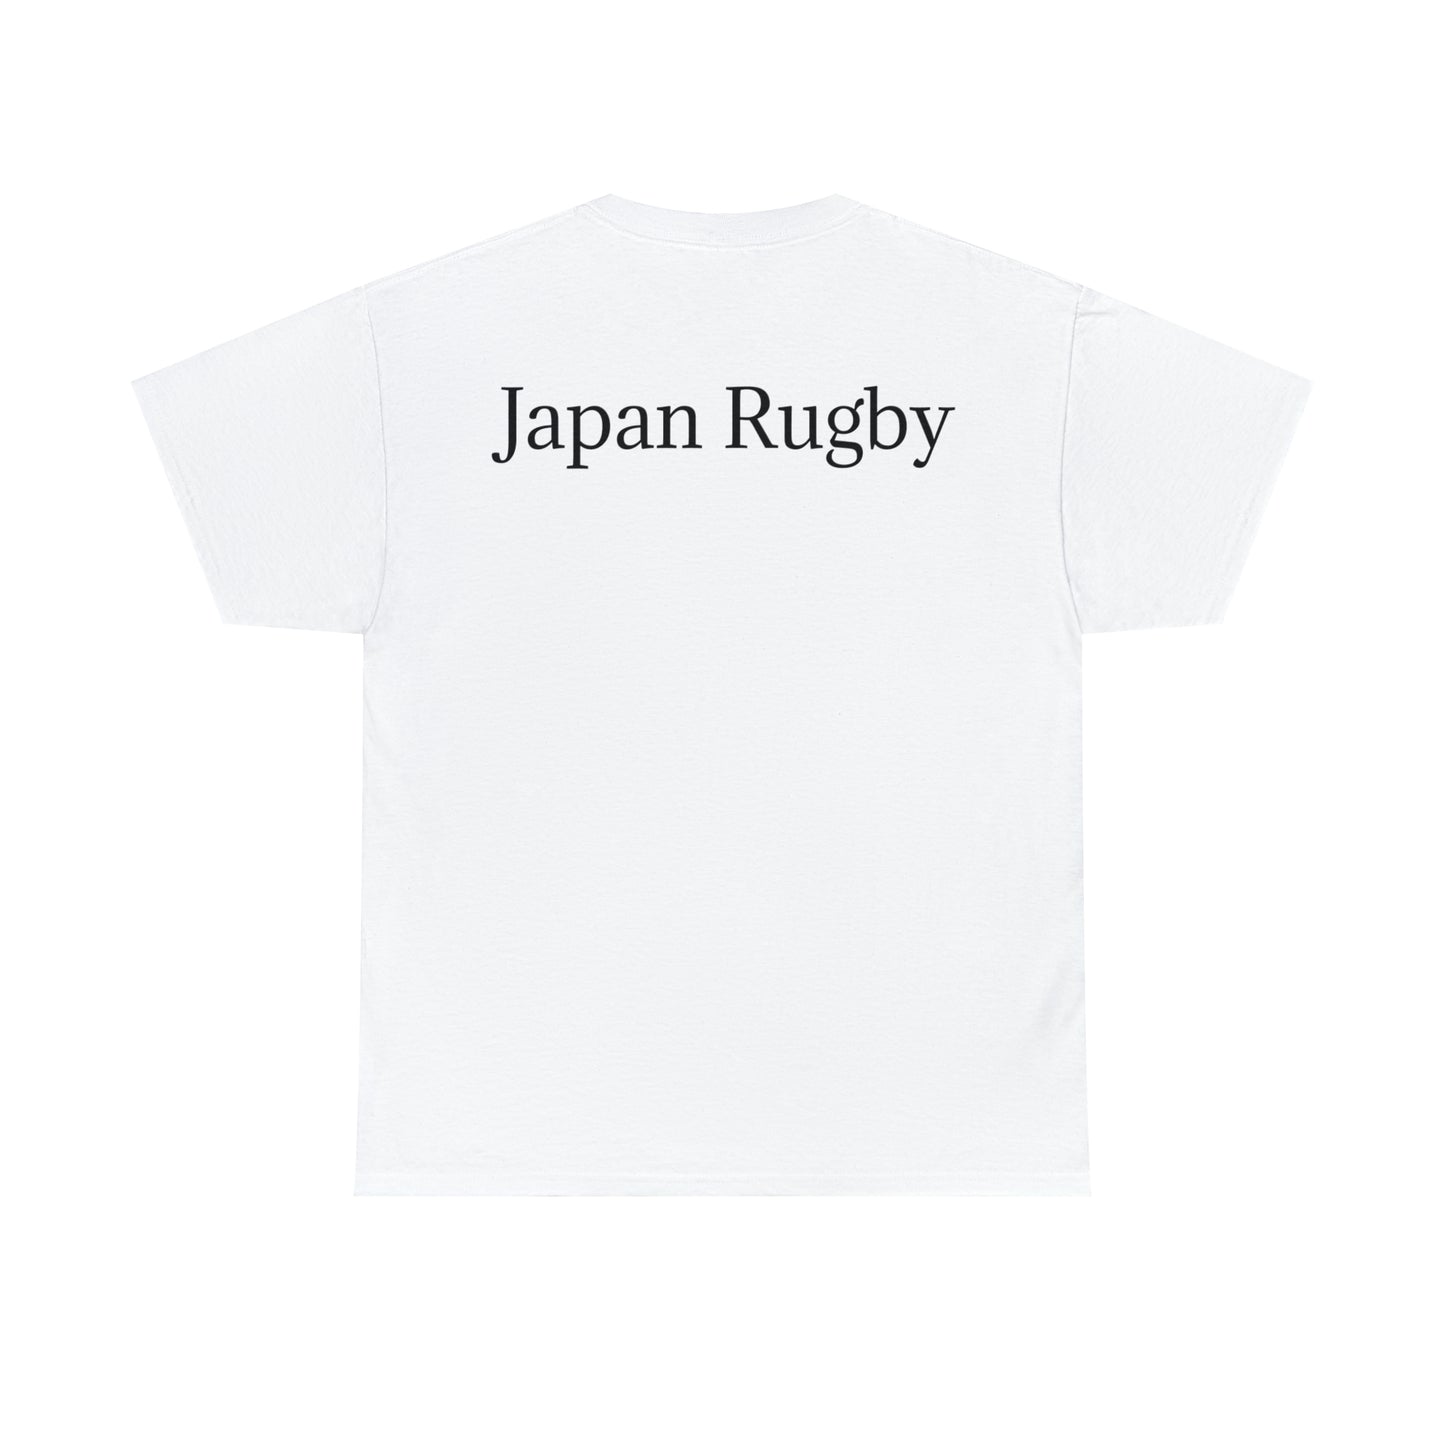 Japan RWC photoshoot - light shirts